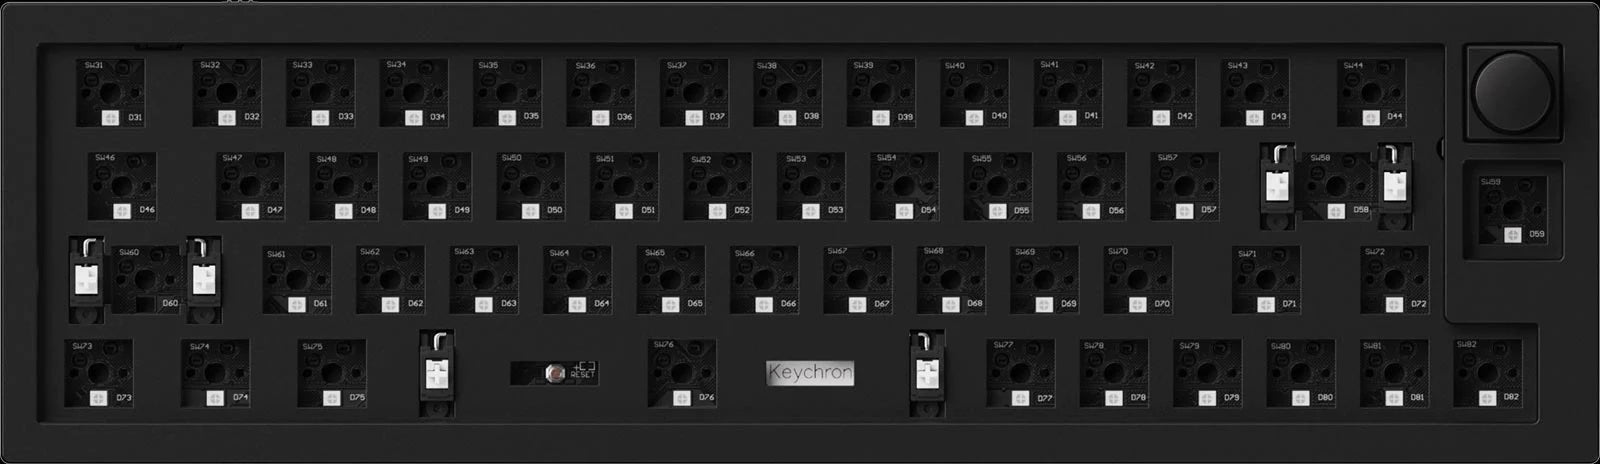 Keychron Q9 w/ Knob Black Aluminum Barebones Mechanical Keyboard